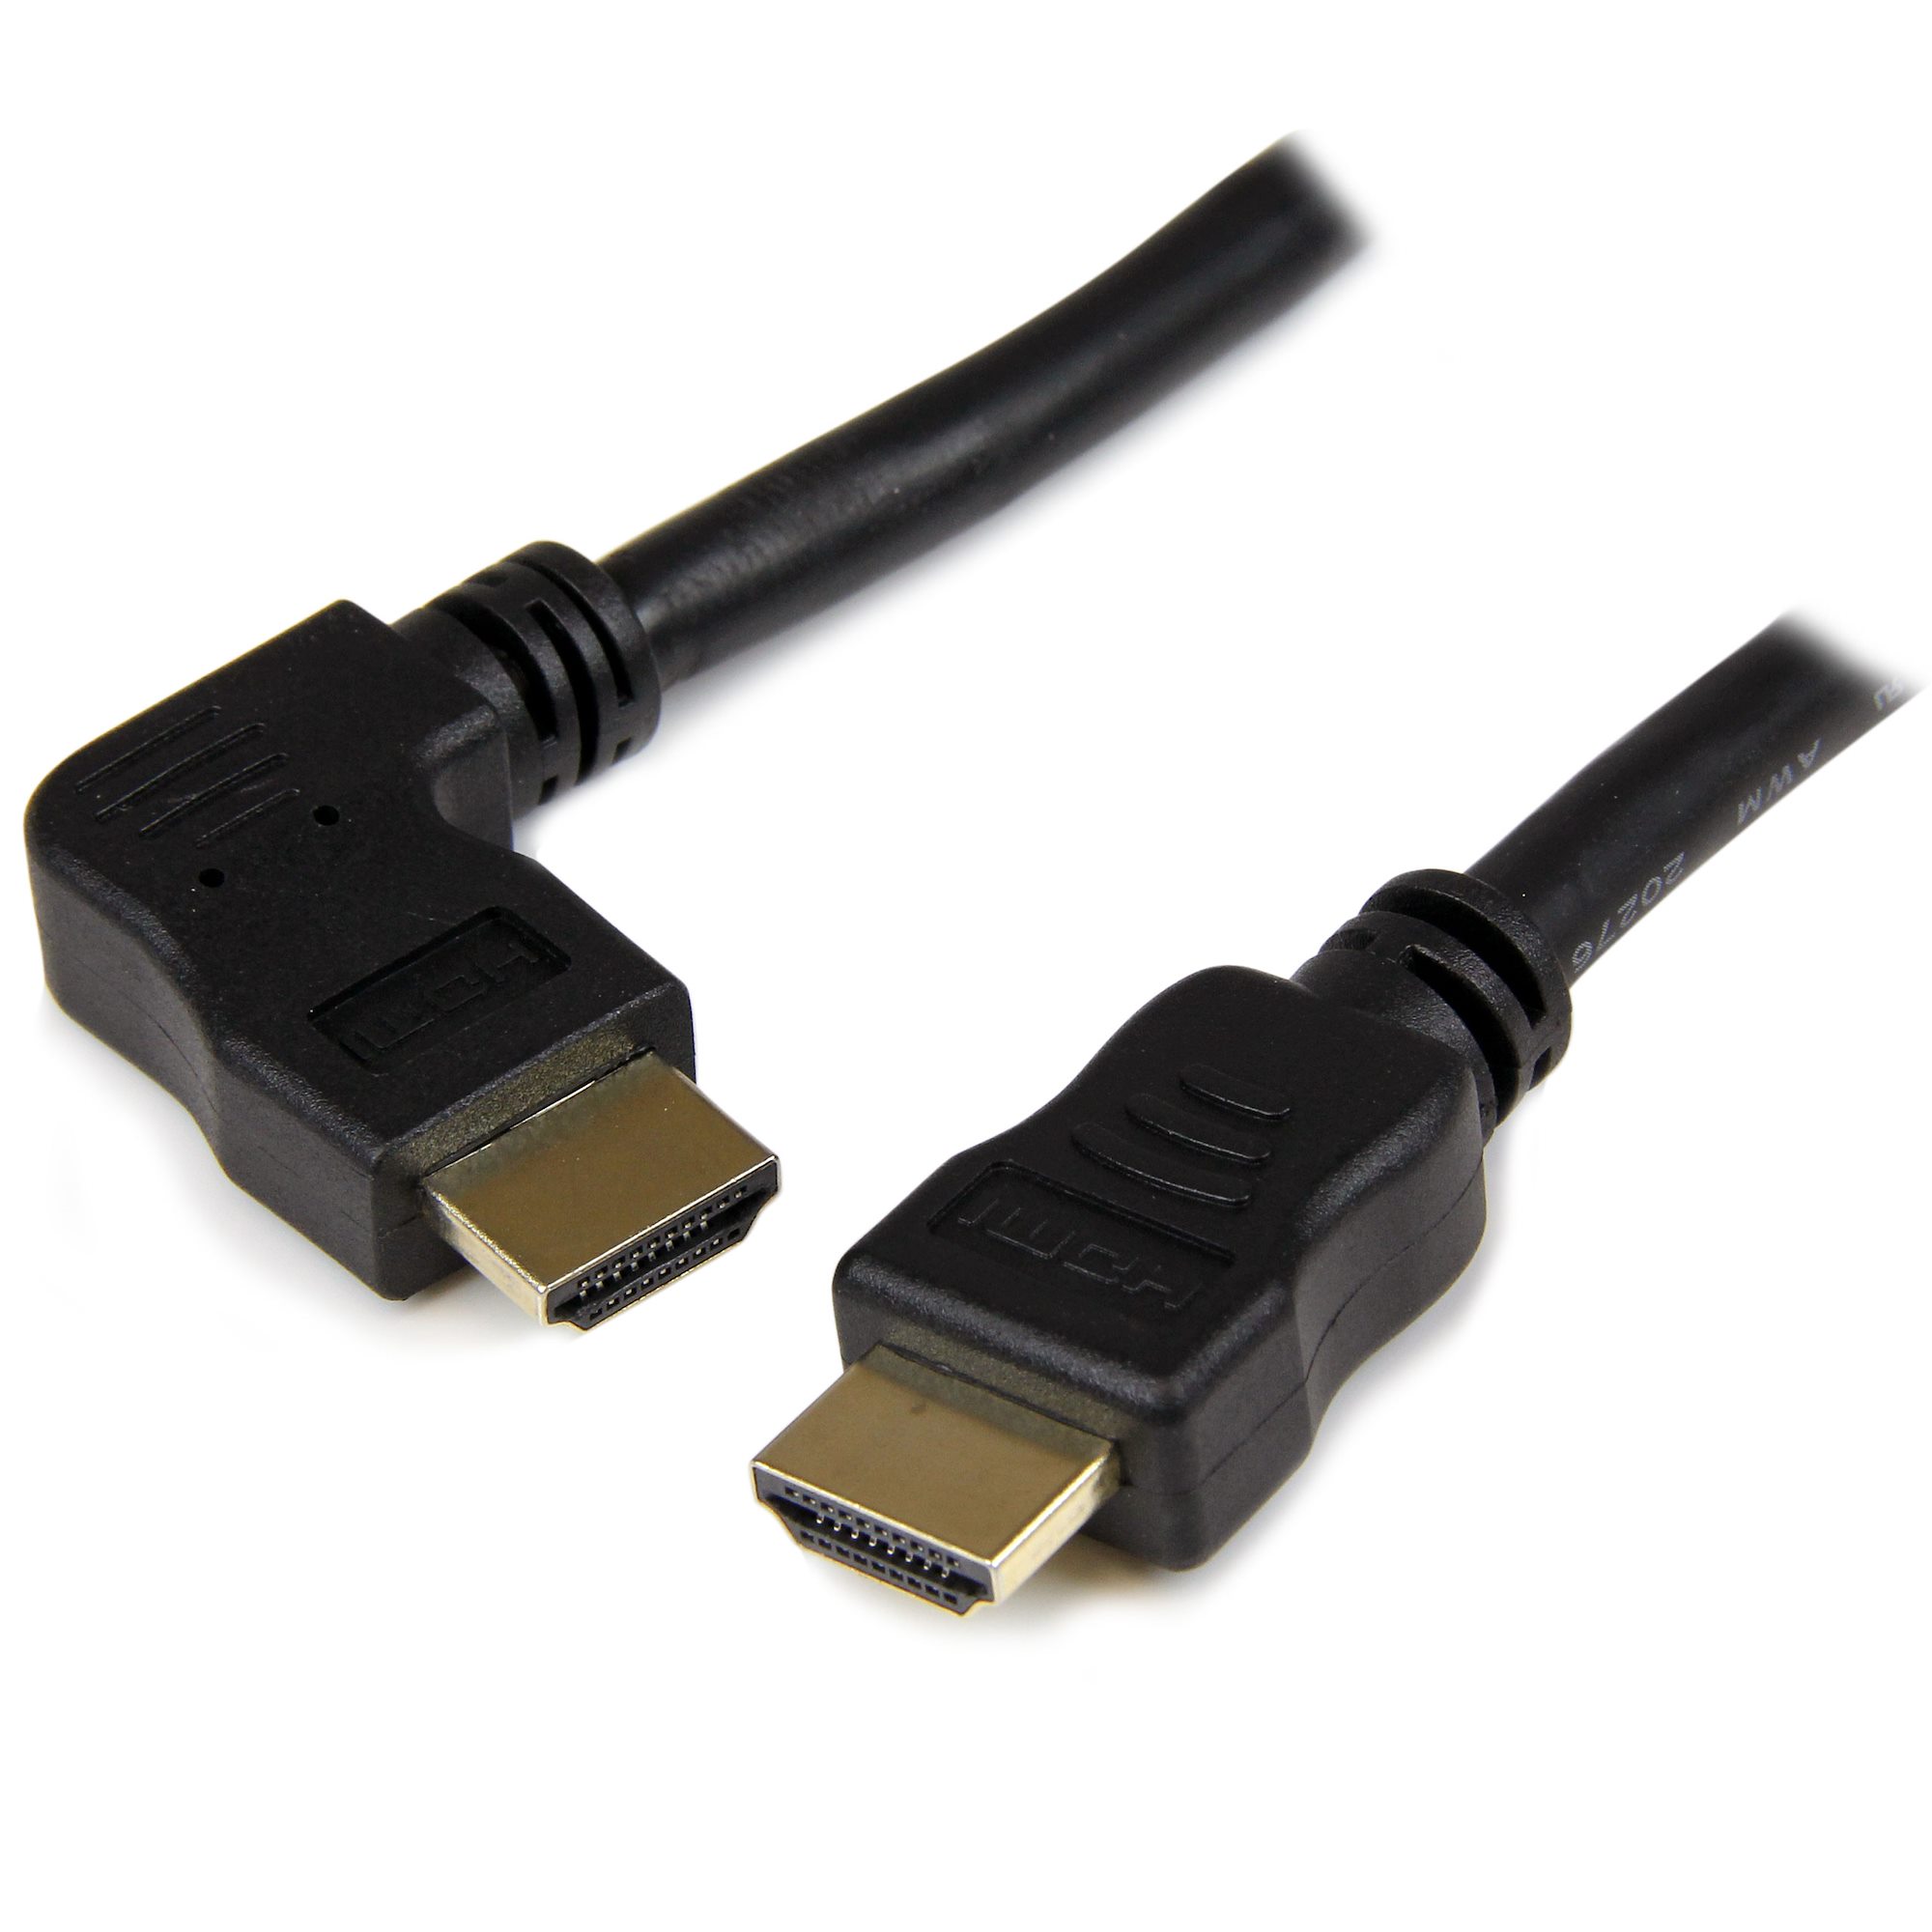 Câble HDMI haute vitesse Utra HD 4K de 2m - HDMI vers HDMI coudé à angle  gauche - Mâle / Mâle